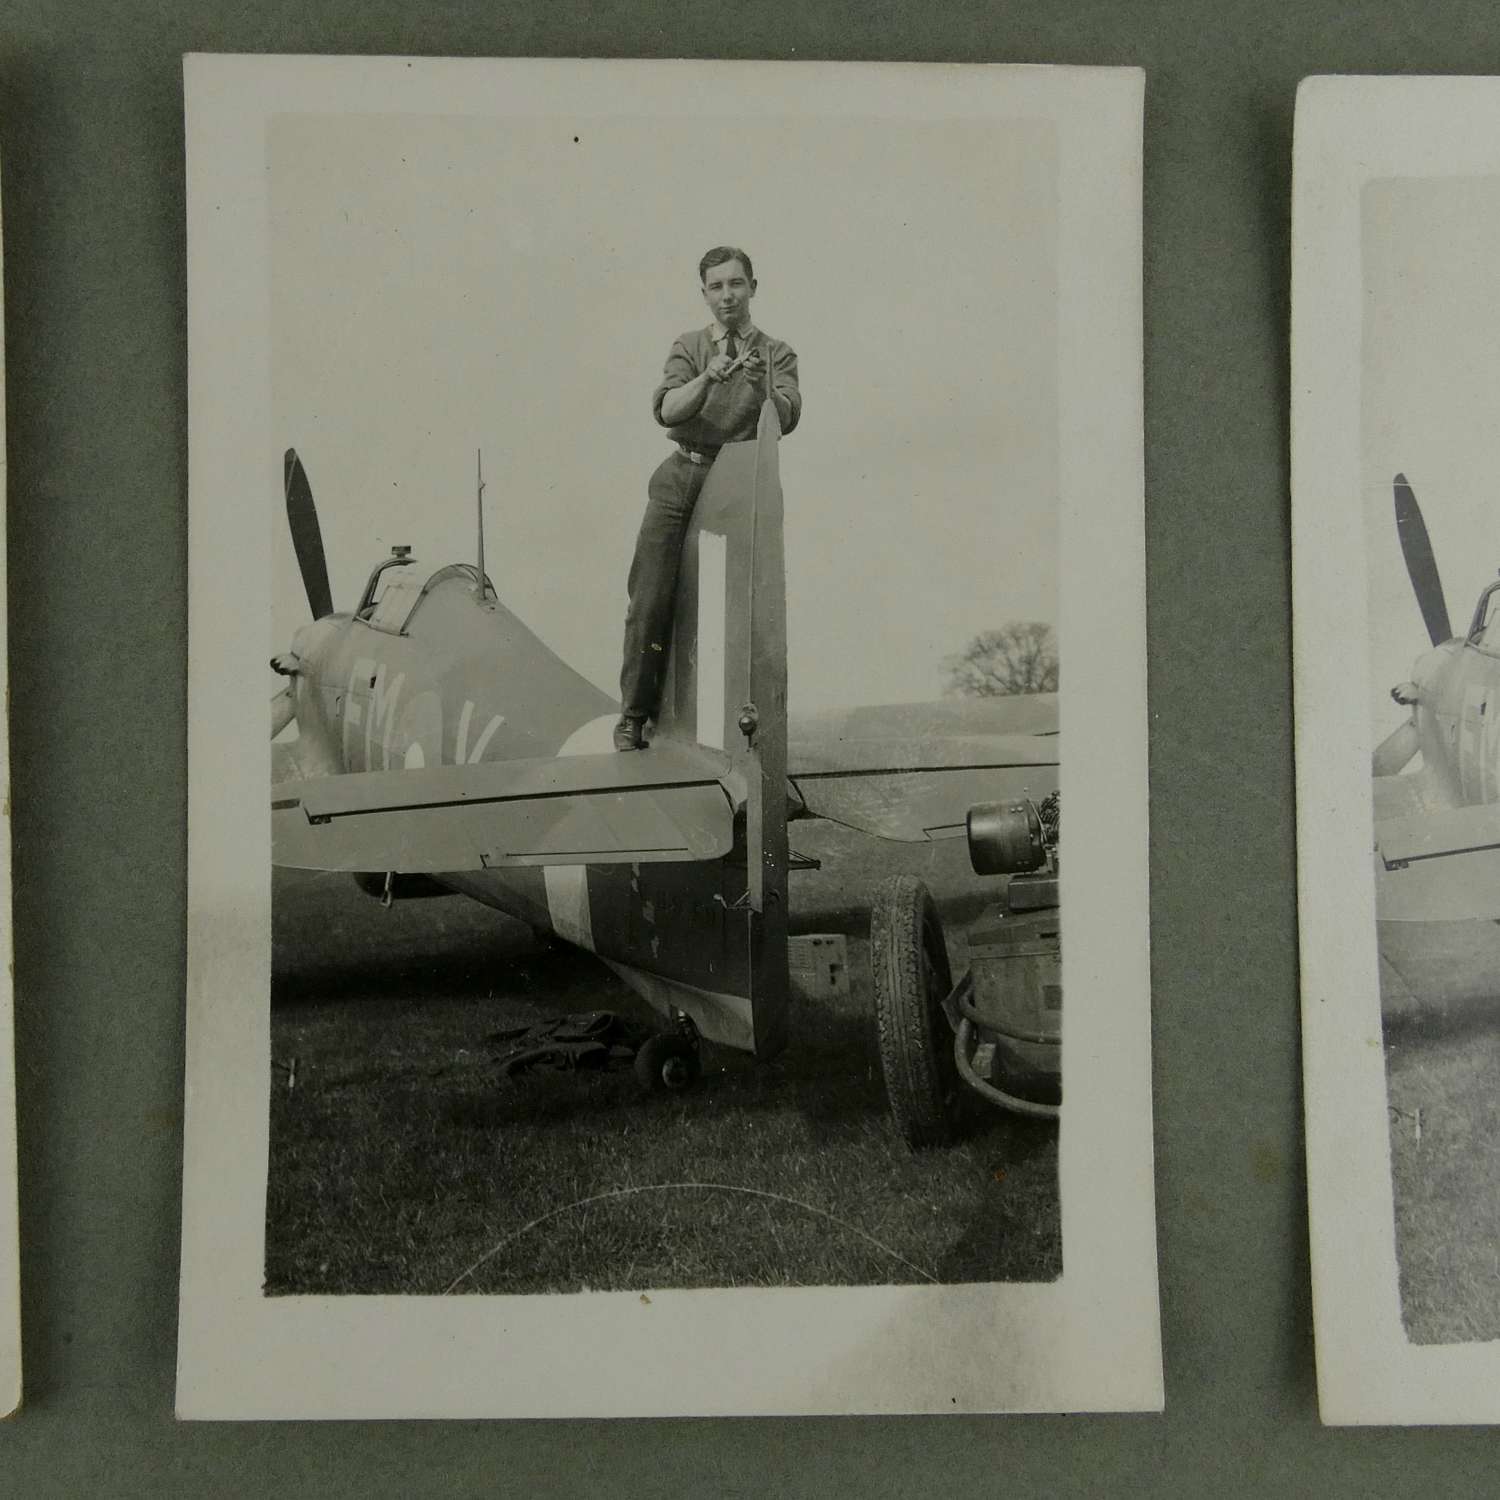 Photograph album with RAF content